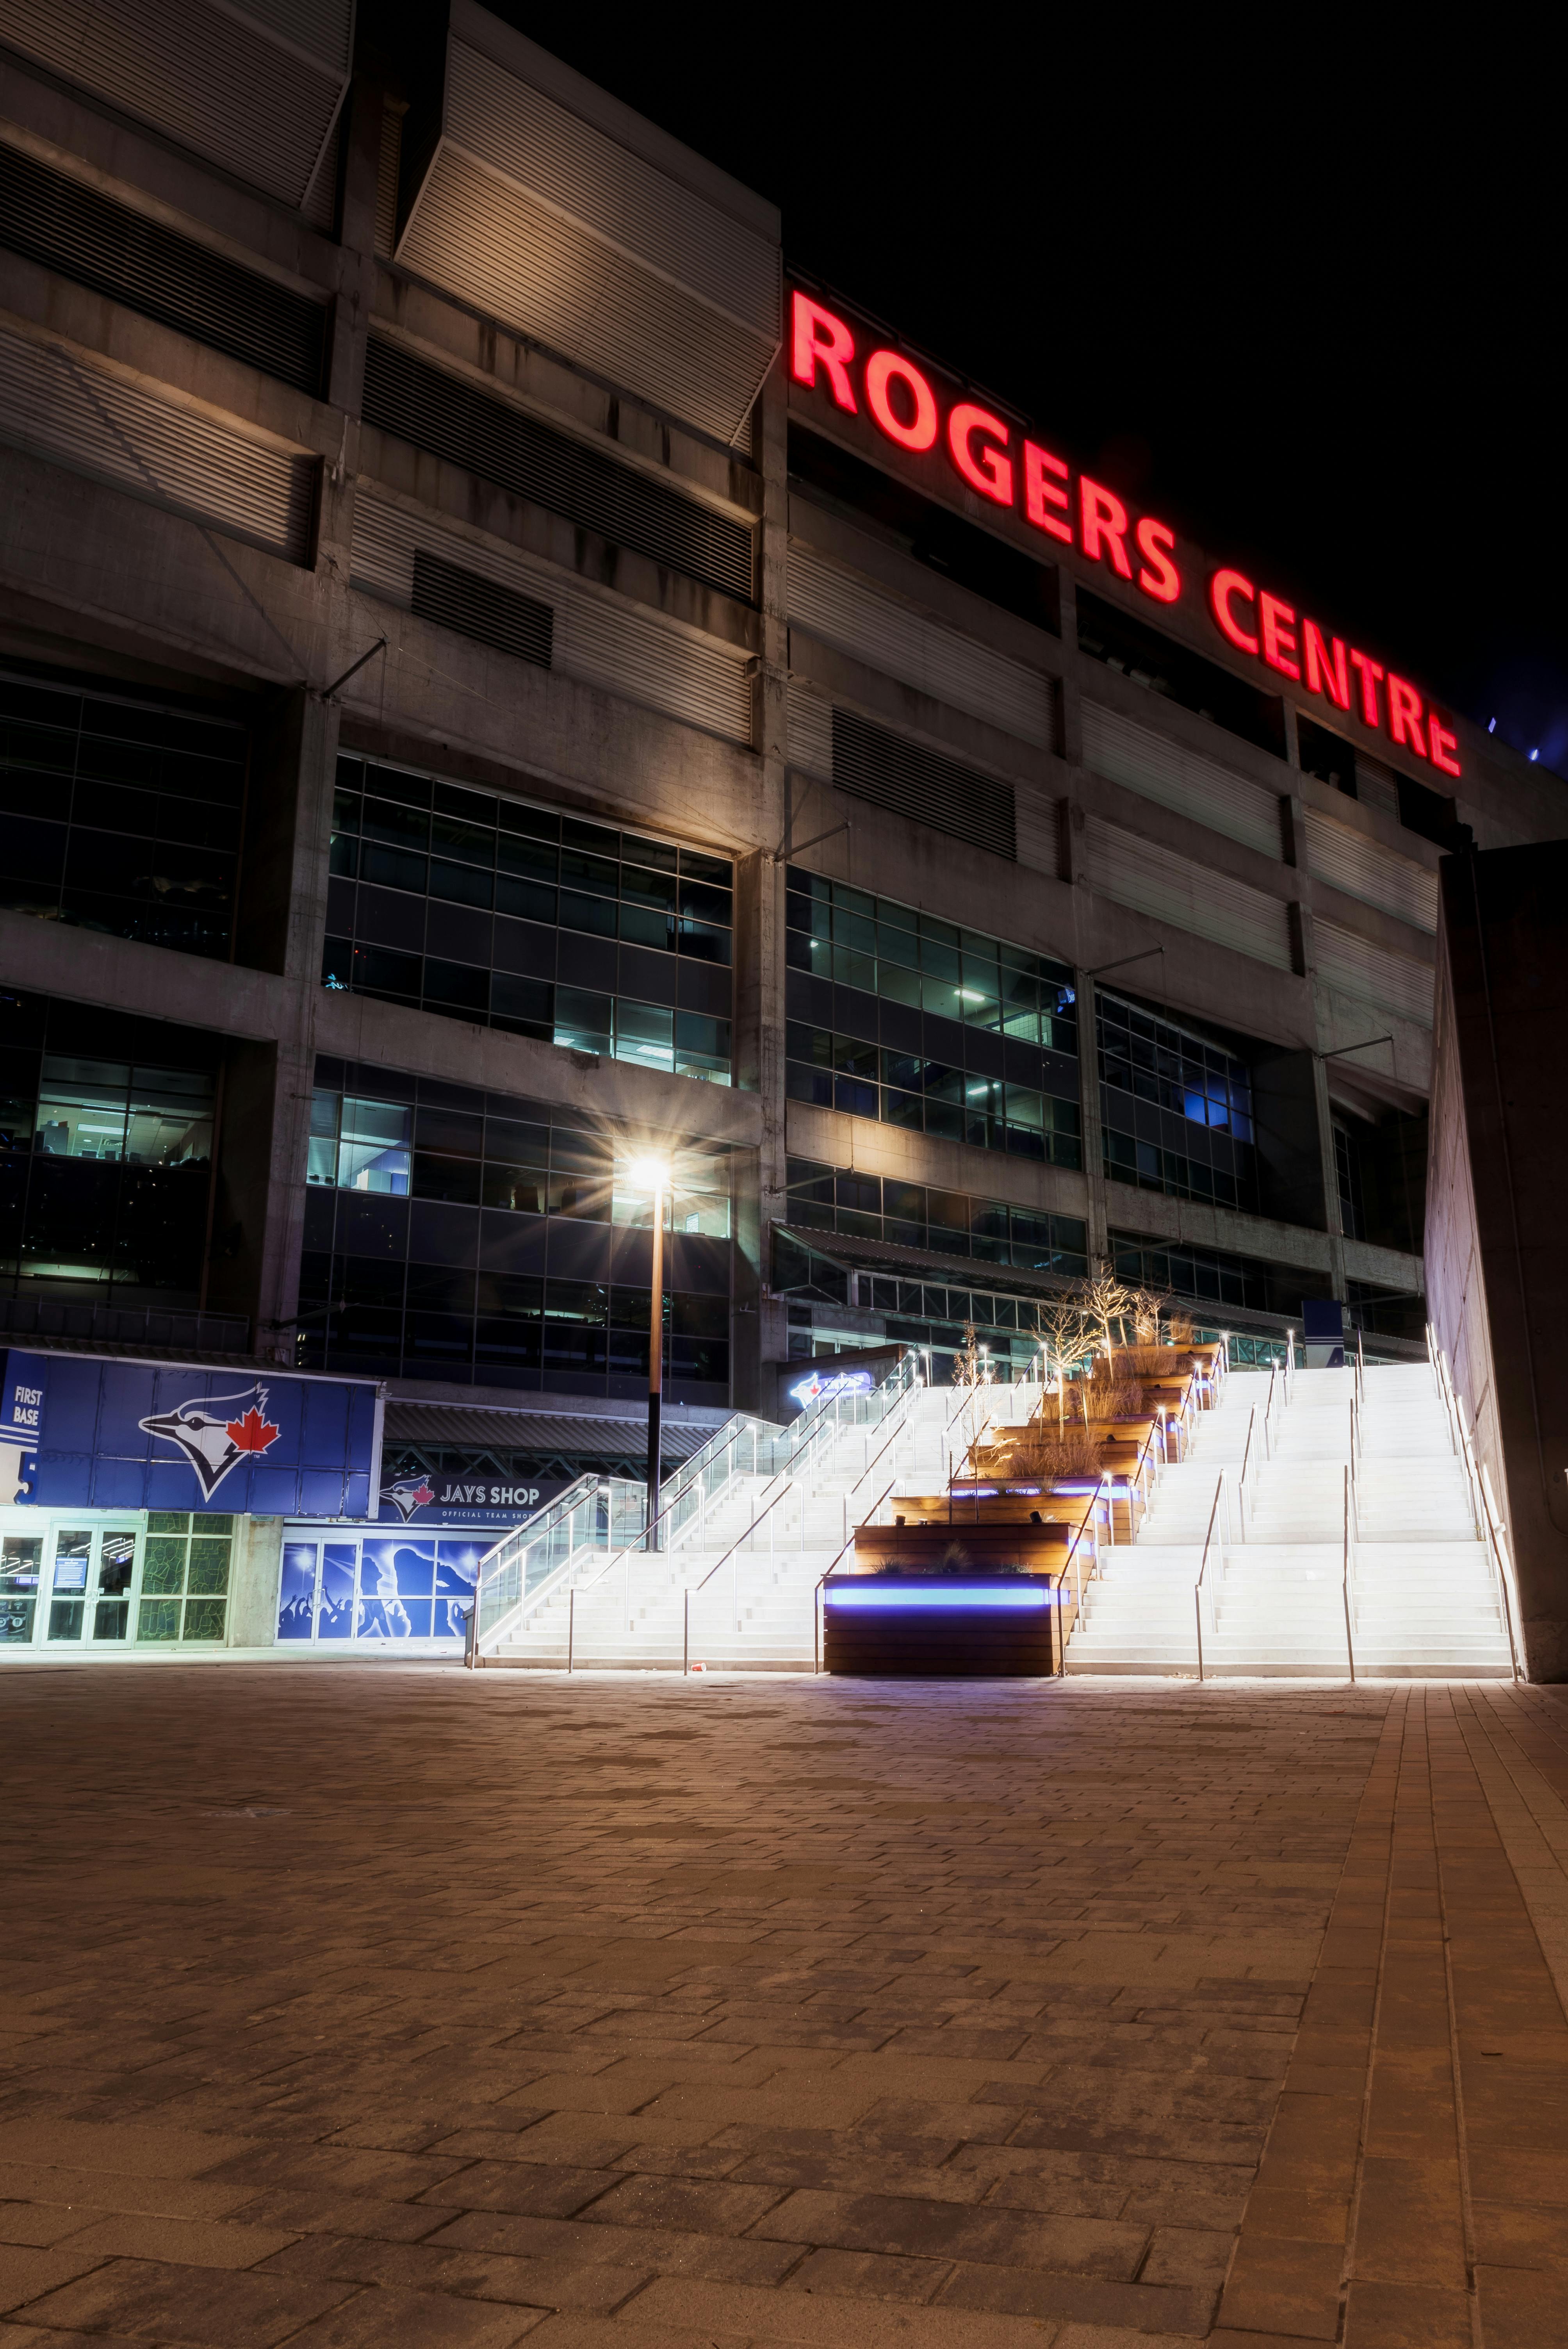 Roger Centre Stadium at Night Time · Free Stock Photo